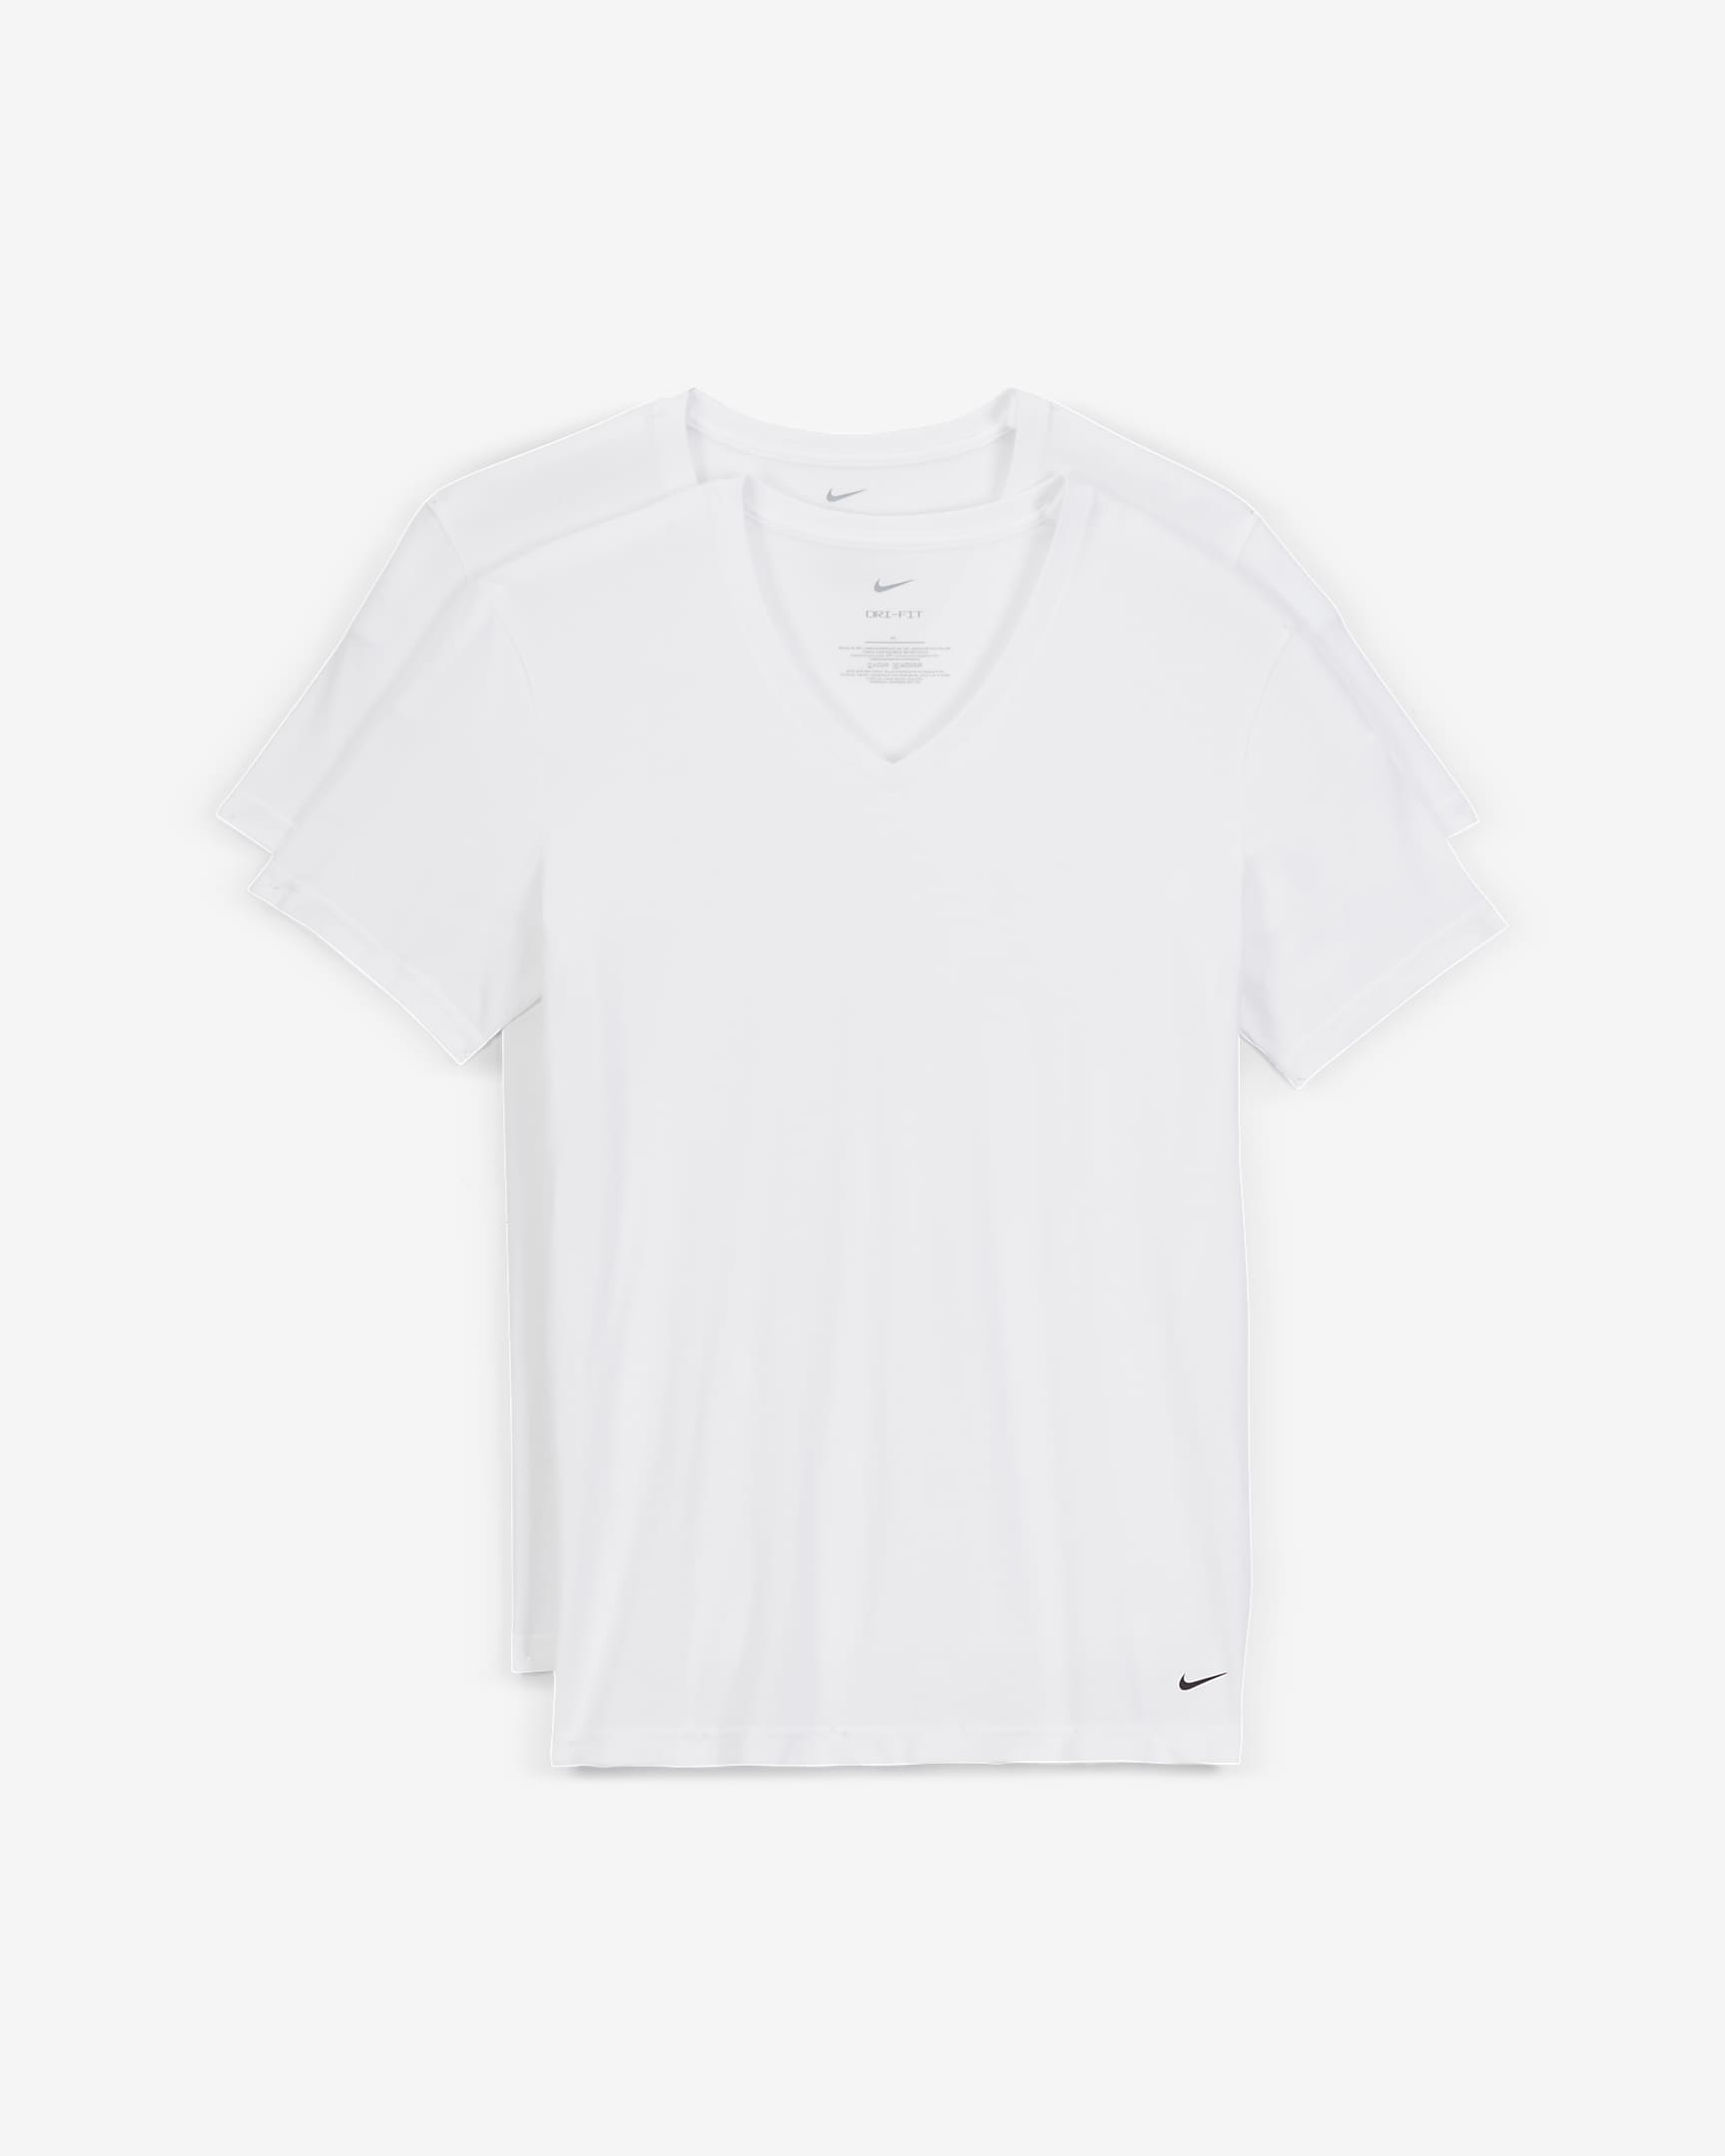 Nike Dri-FIT Essential Cotton Stretch Slim Fit V-Neck Undershirt (2 ...